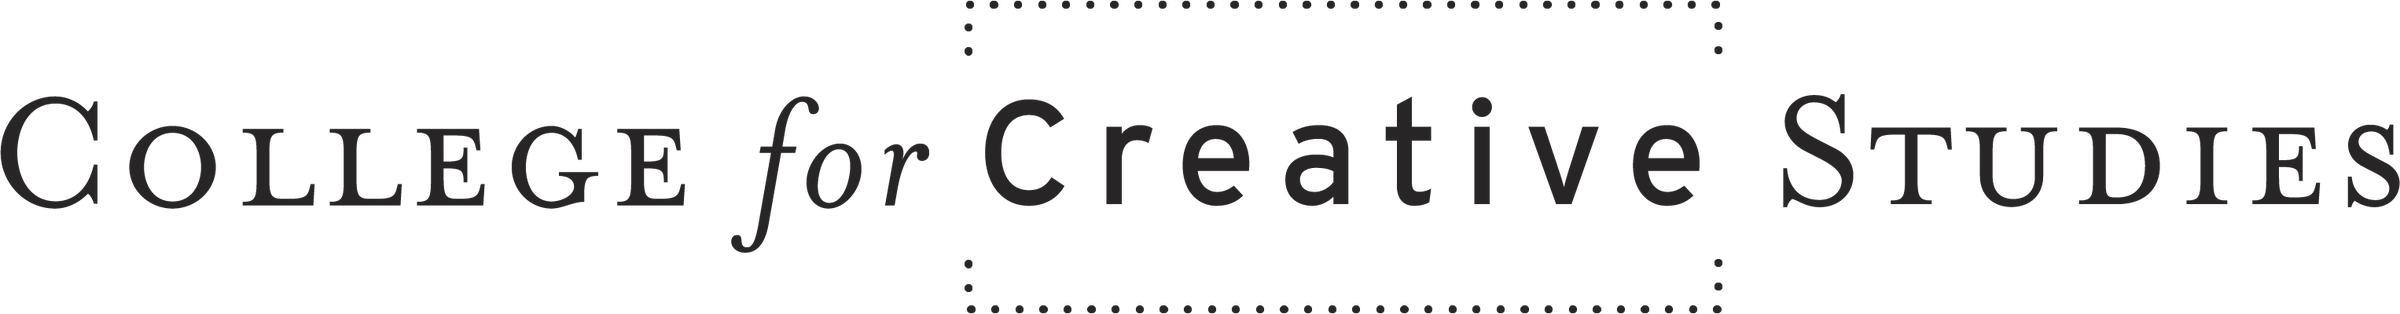 College of Creative Studies logo